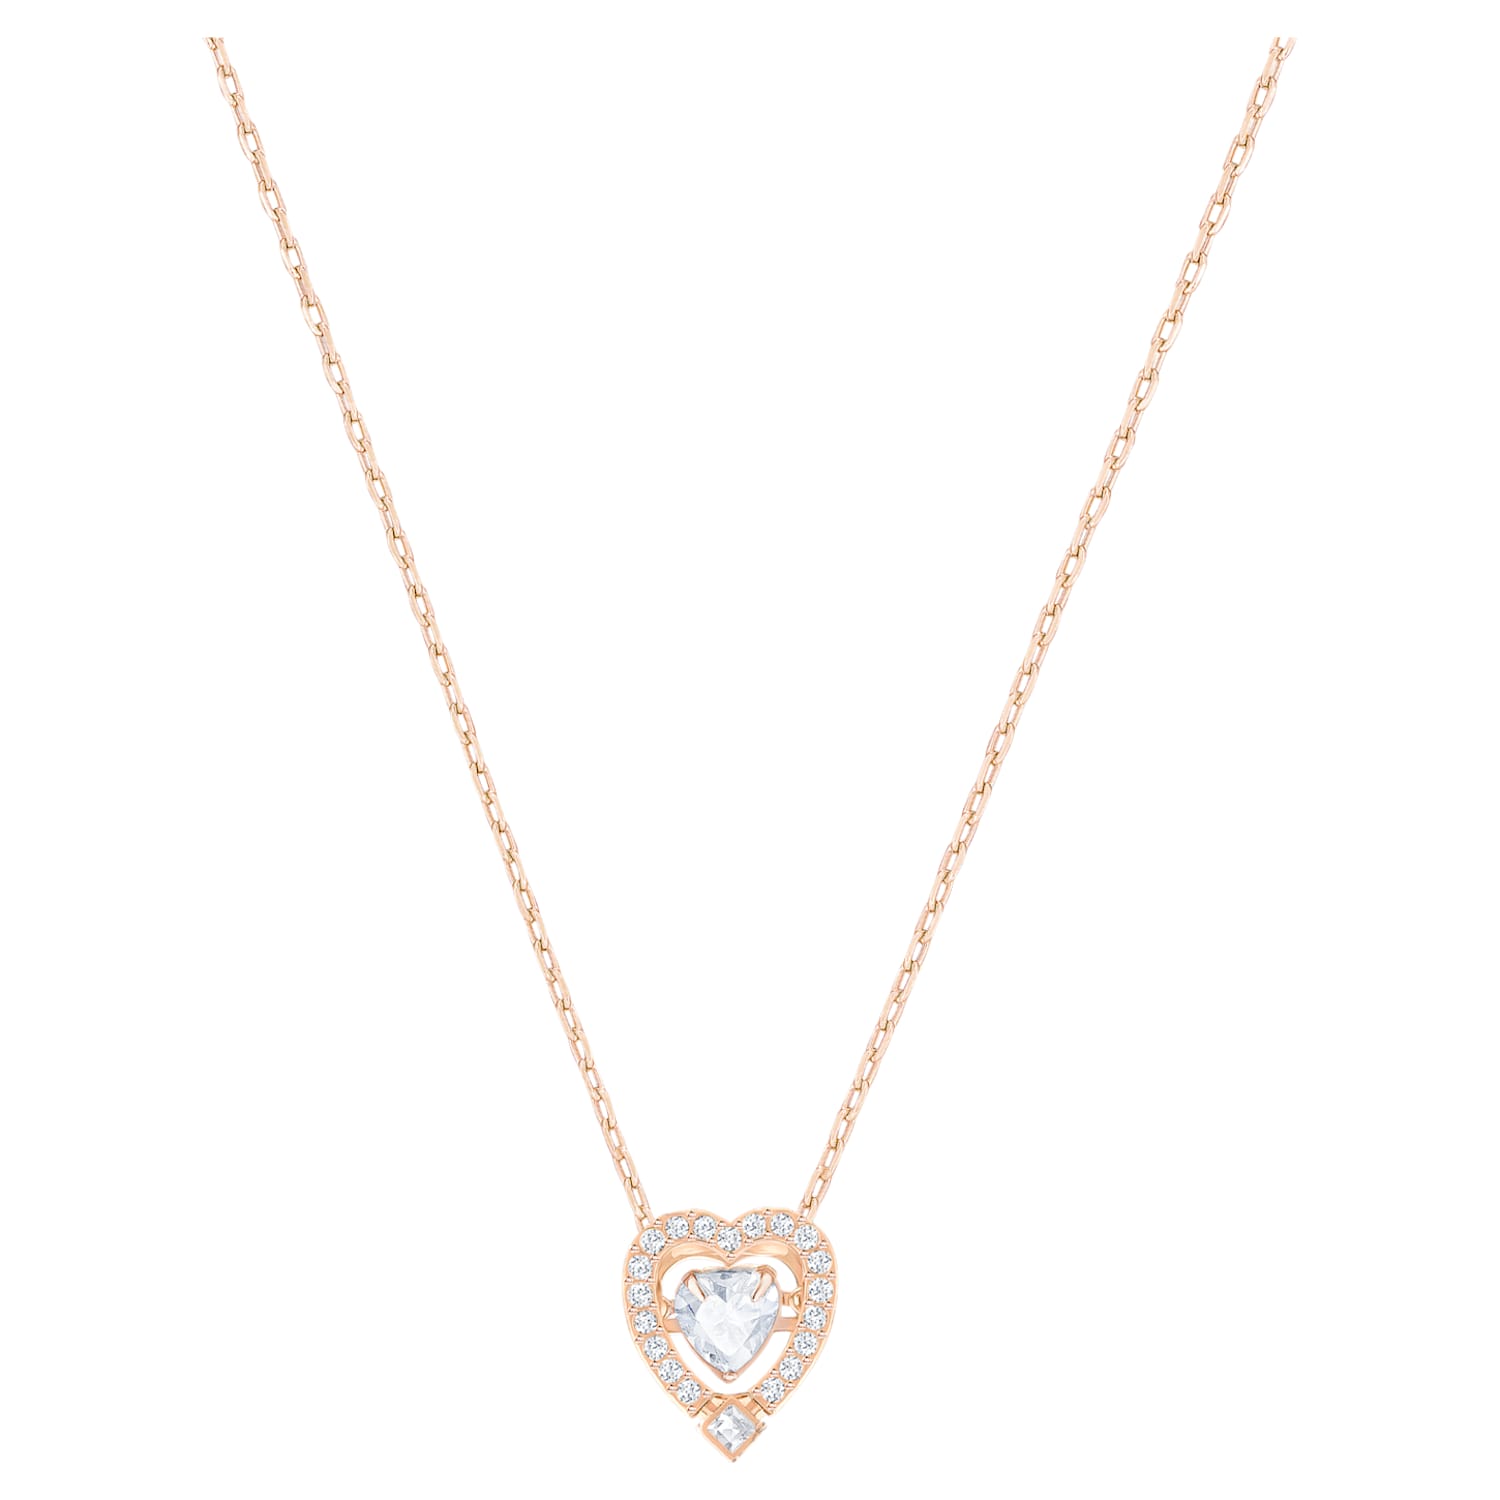 Swarovski Sparkling Dance Heart Necklace, White, Rose-gold tone plated